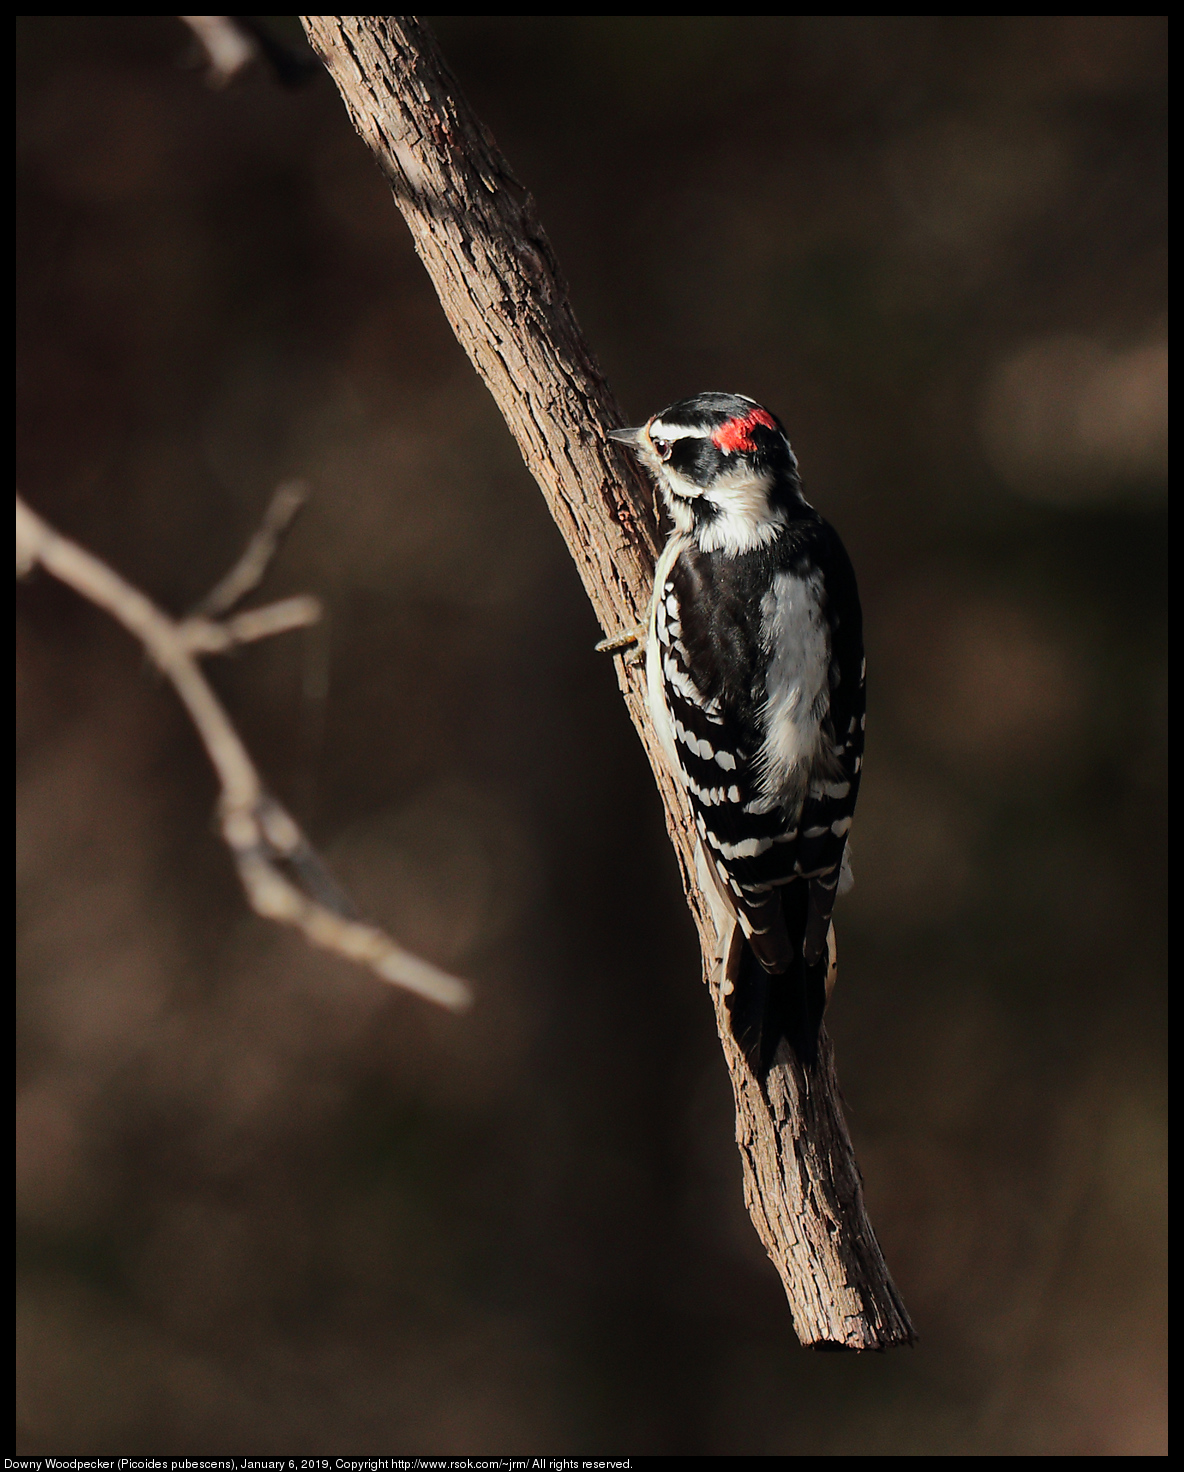 Downy Woodpecker (Picoides pubescens), January 6, 2019